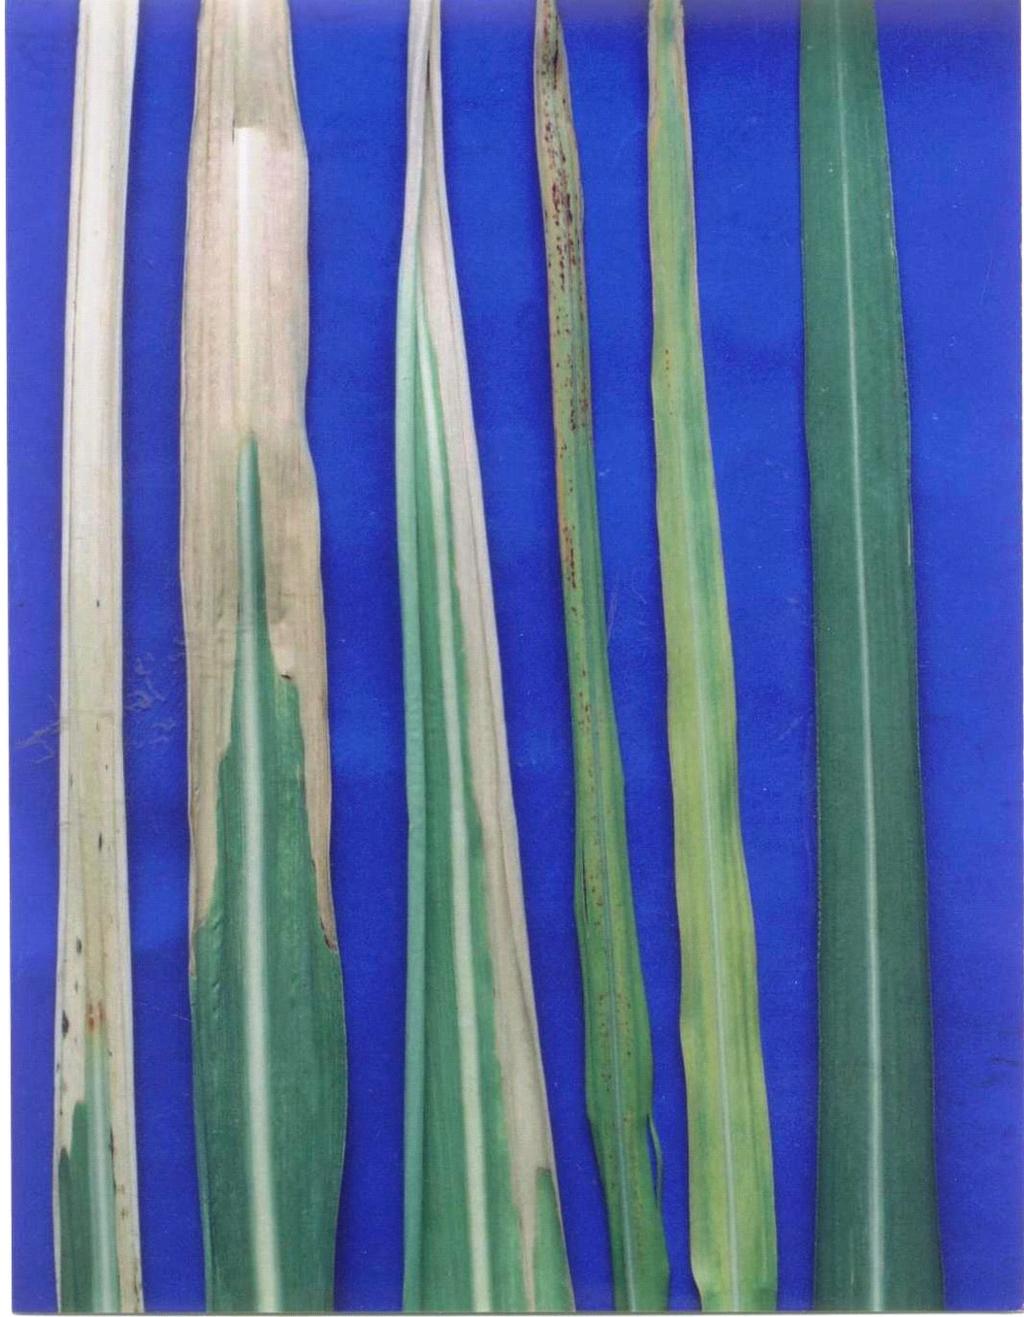 Plate- 1: Sugarcane leaf burning due to high